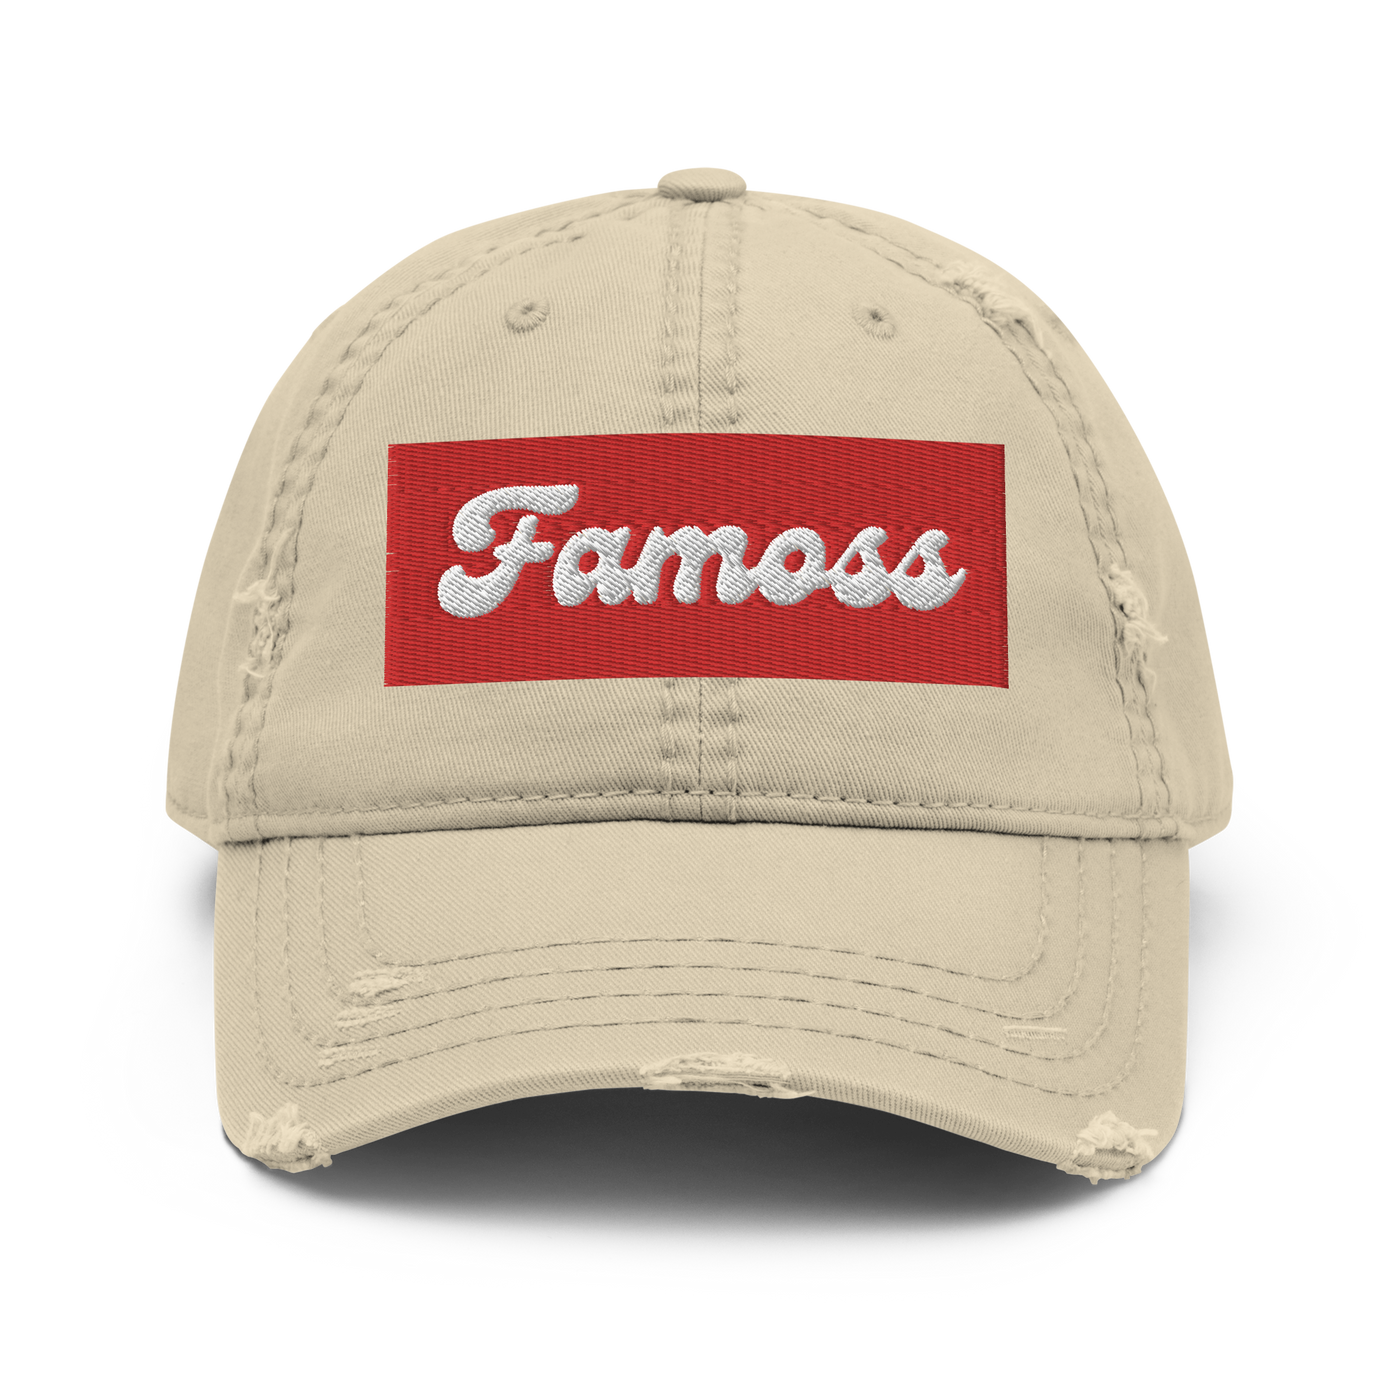 Red FAMOSS Khaki Distressed Hat